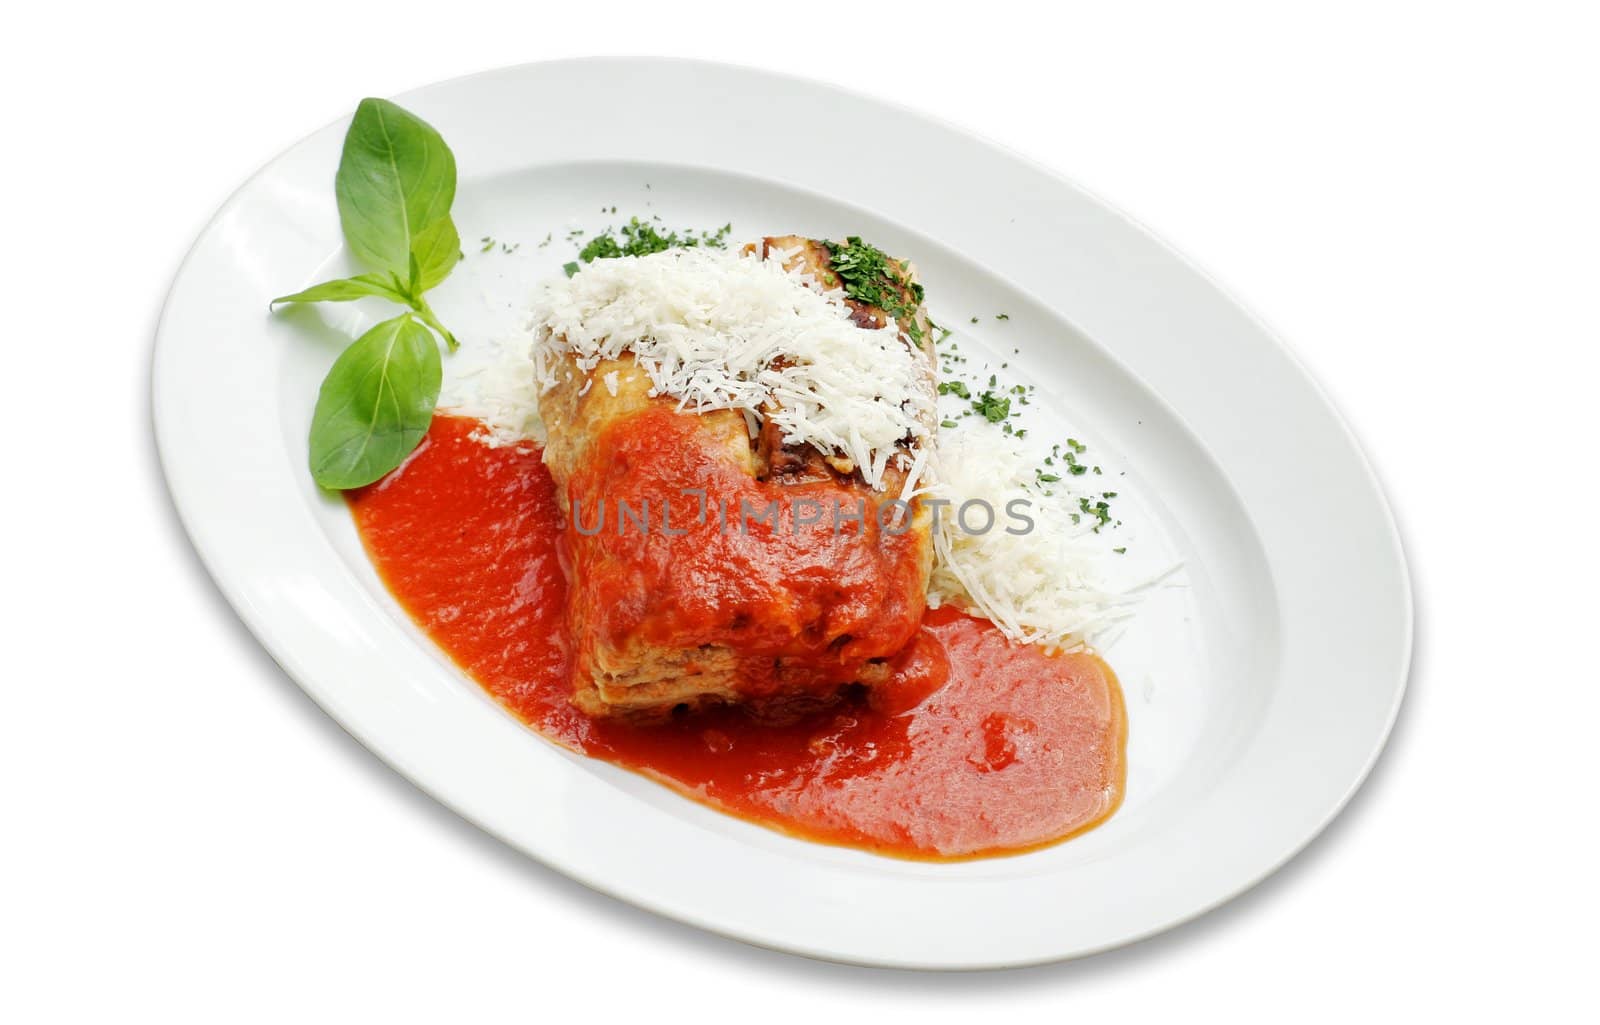 Italian lasagna by AlexKhrom